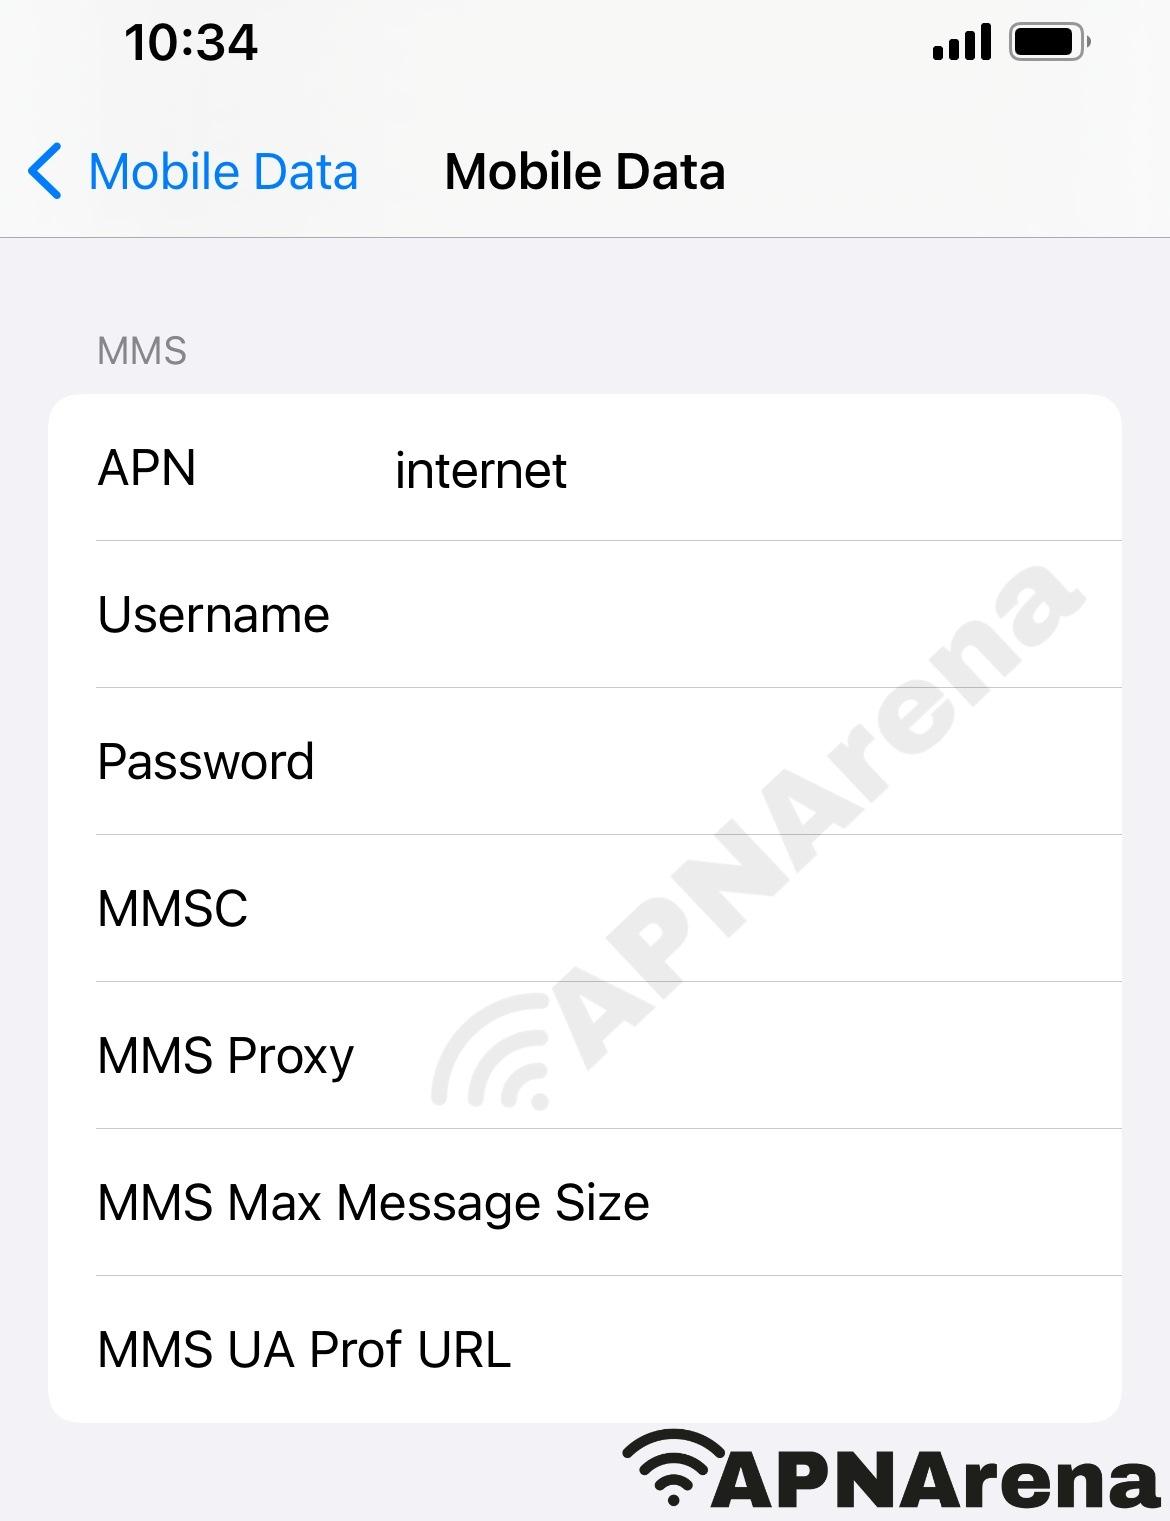 GloNet (4G) MMS Settings for iPhone